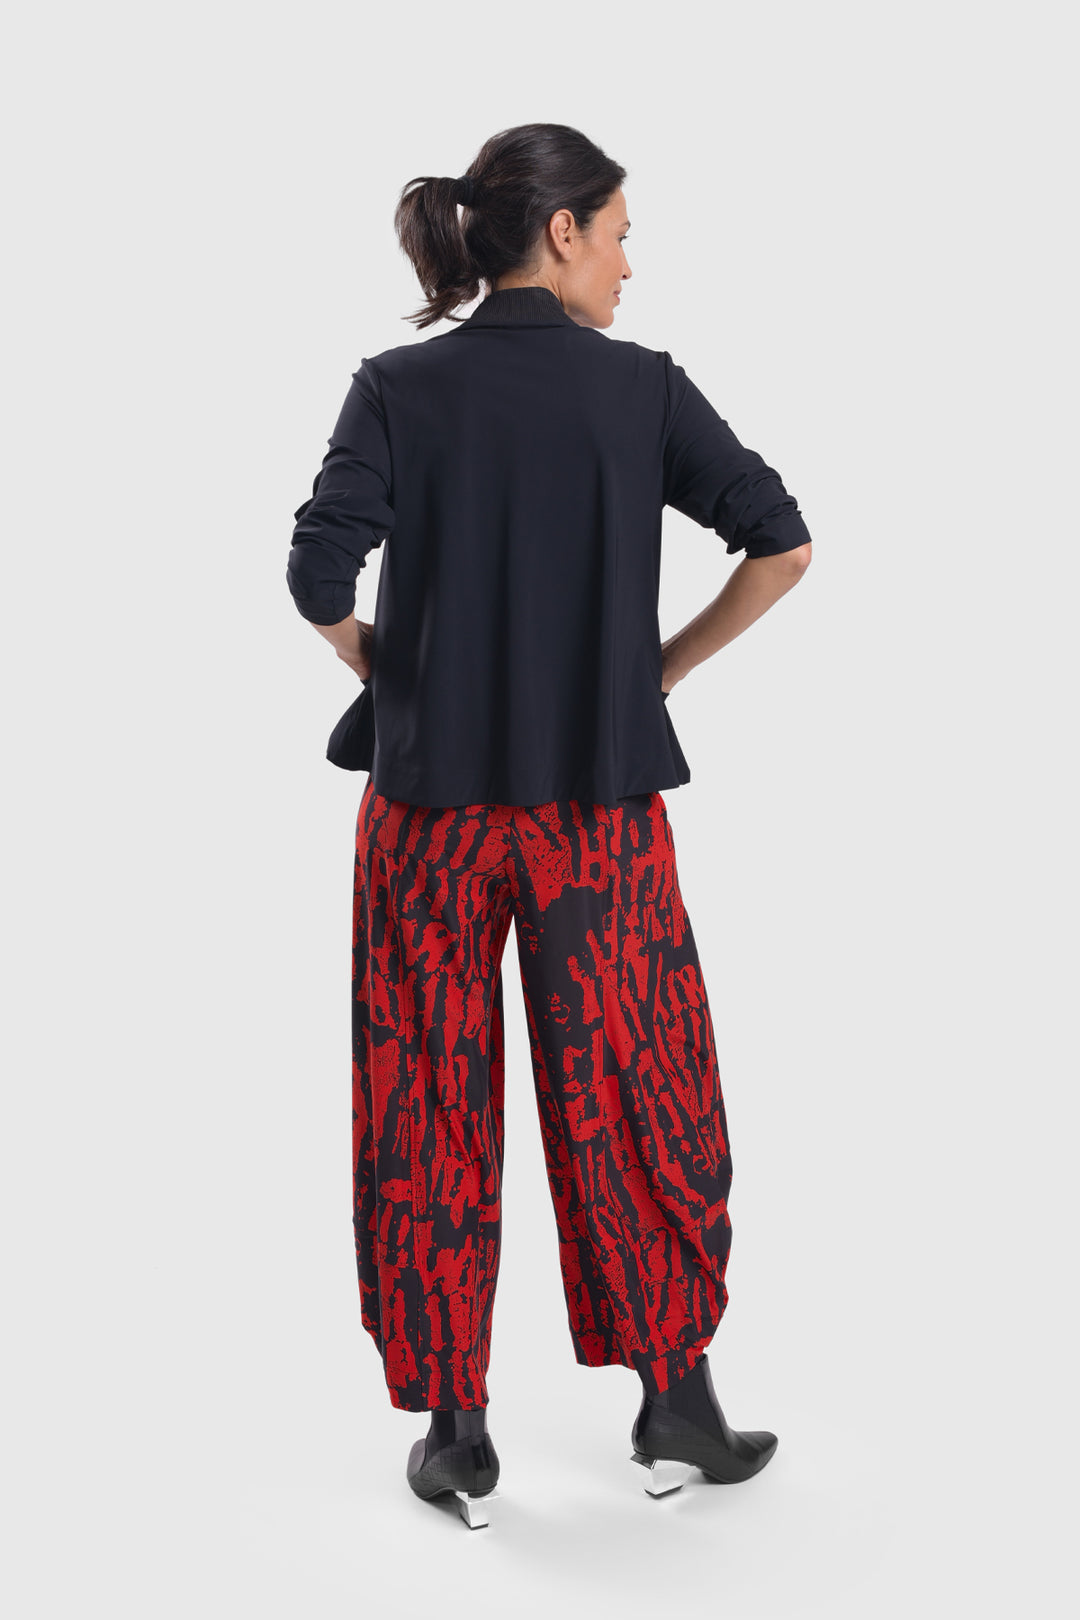 red & black tekbika graffiti punto pants for ladies over 50